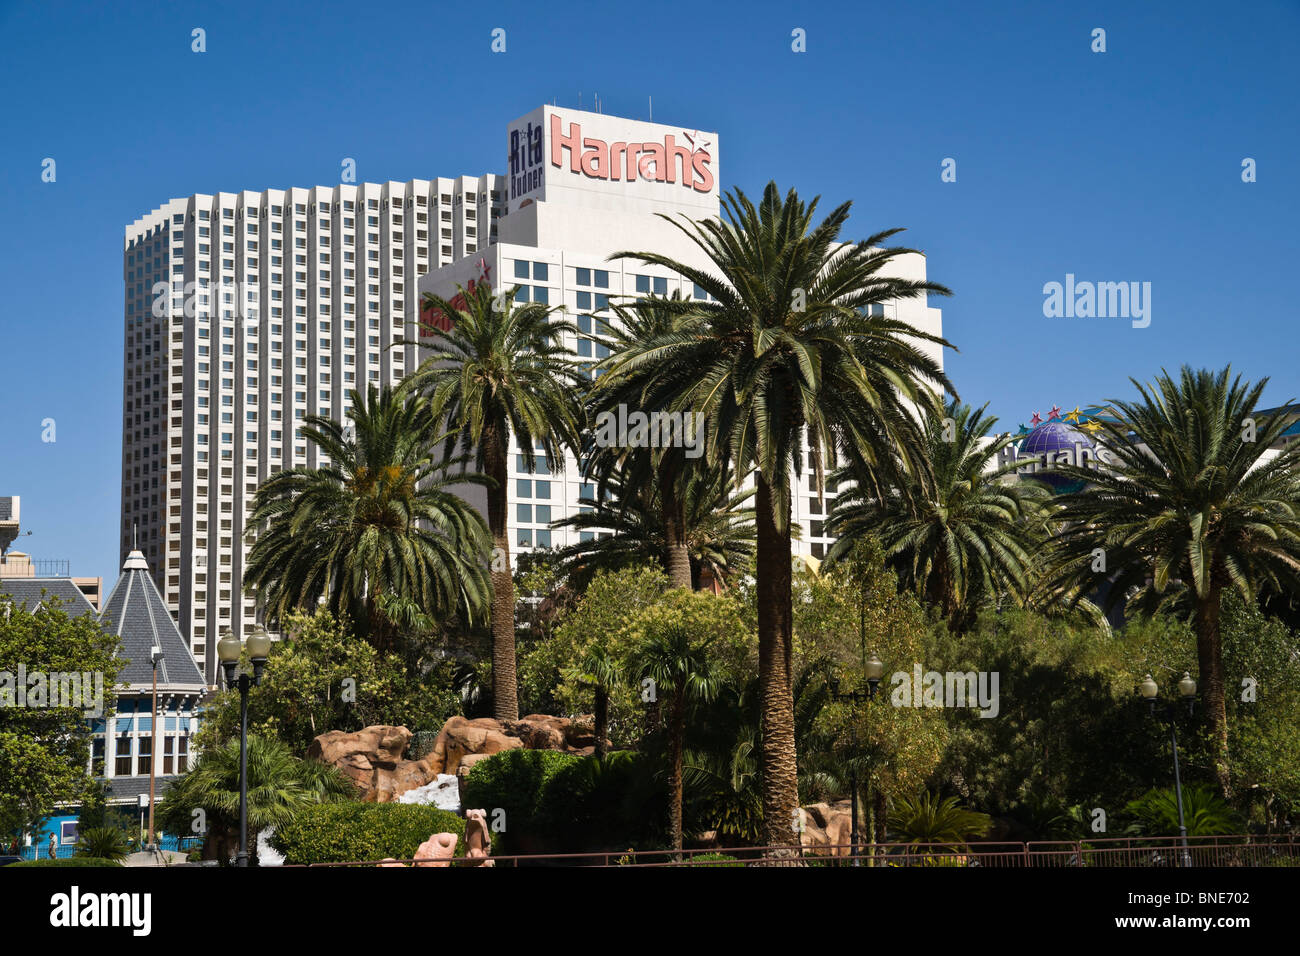 Harrah's Hotel and Casino Las Vegas strip Stock Photo